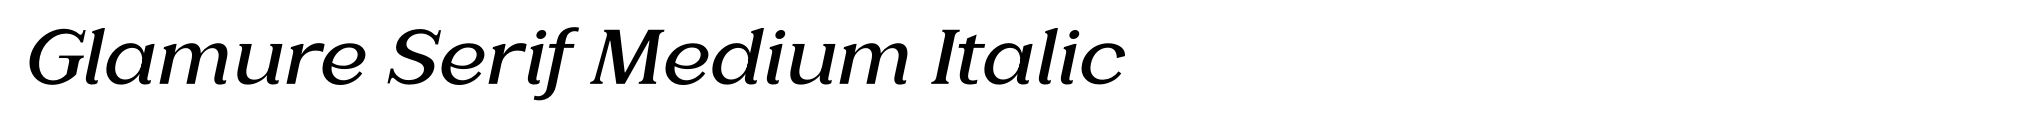 Glamure Serif Medium Italic image